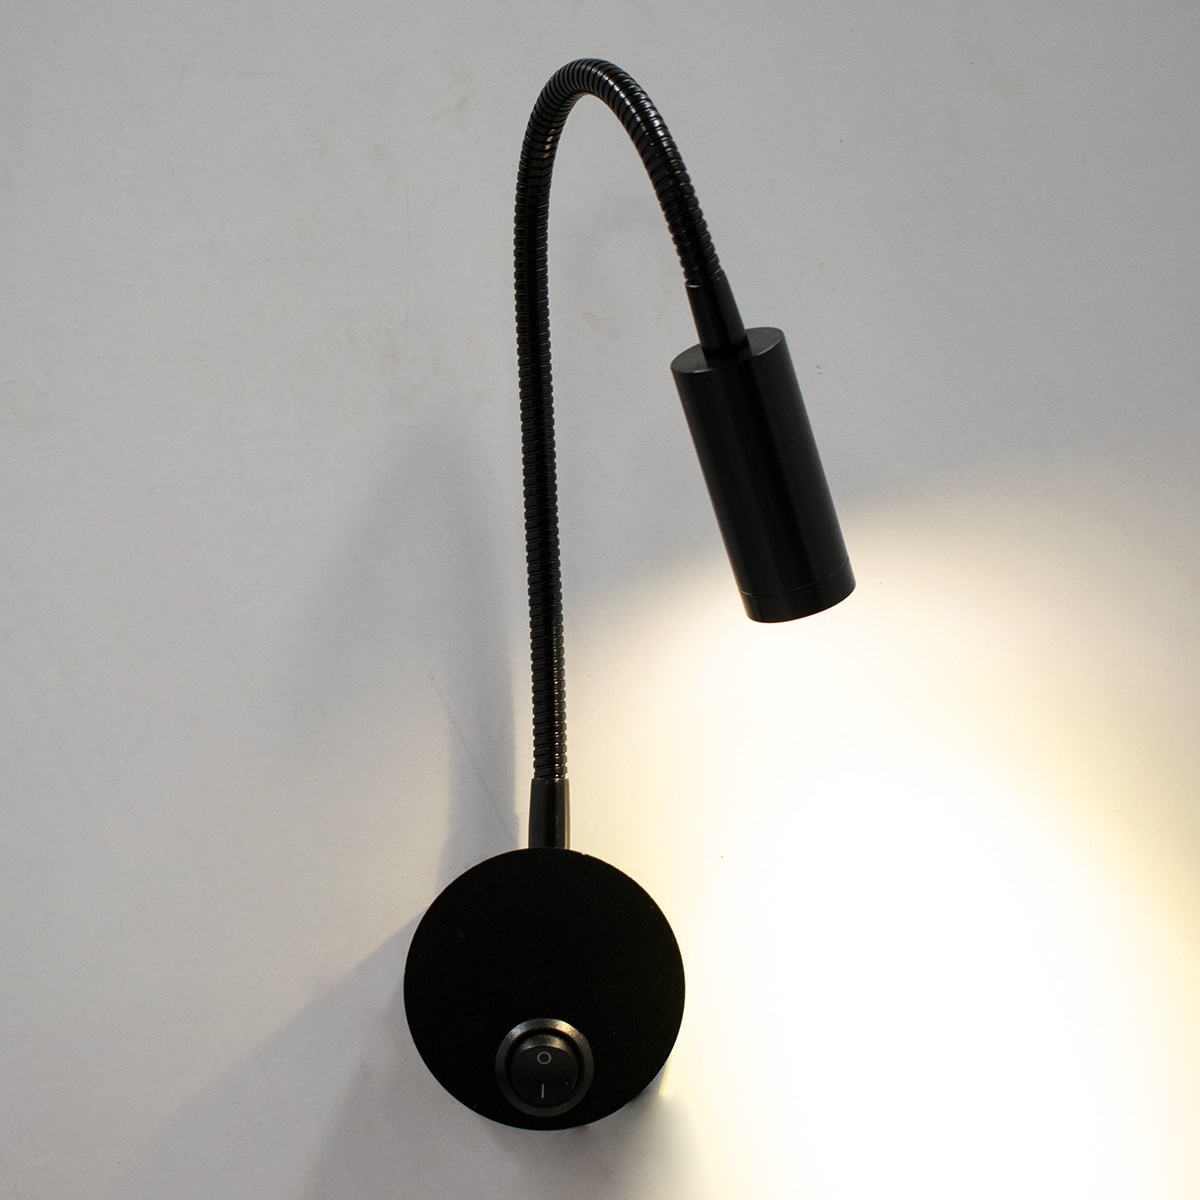 LED Φωτιστικό Τοίχου Απλίκα Reading CREE 3W Μονόφωτο Μαύρο με Ρυθμιζόμενο Σώμα Σπιράλ & Διακόπτη On / Off  Μ6.5 x Π20 x Υ20cm